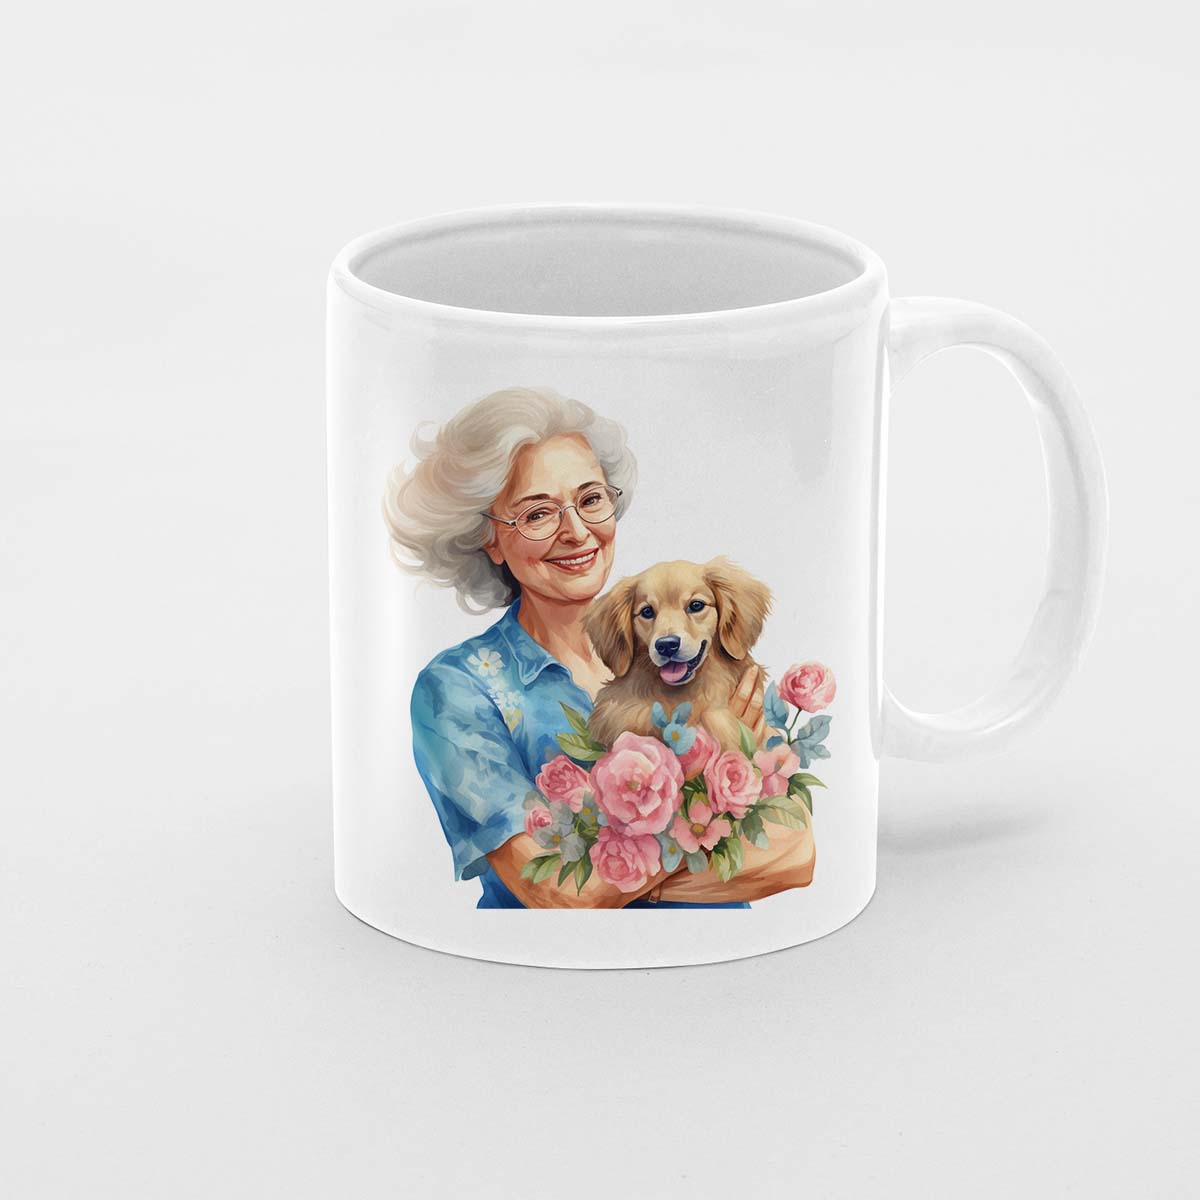 Custom Dog Mom Mug, Grandma and Golden Retriever Love Ceramic Mug, Dog Owner Gift, Dog Lover Mug, Gift For Dog Mom, Gift For Dog Owner, Dog Coffee Mugs, Dog Grandma Coffee Mug, Mother's Day Gift